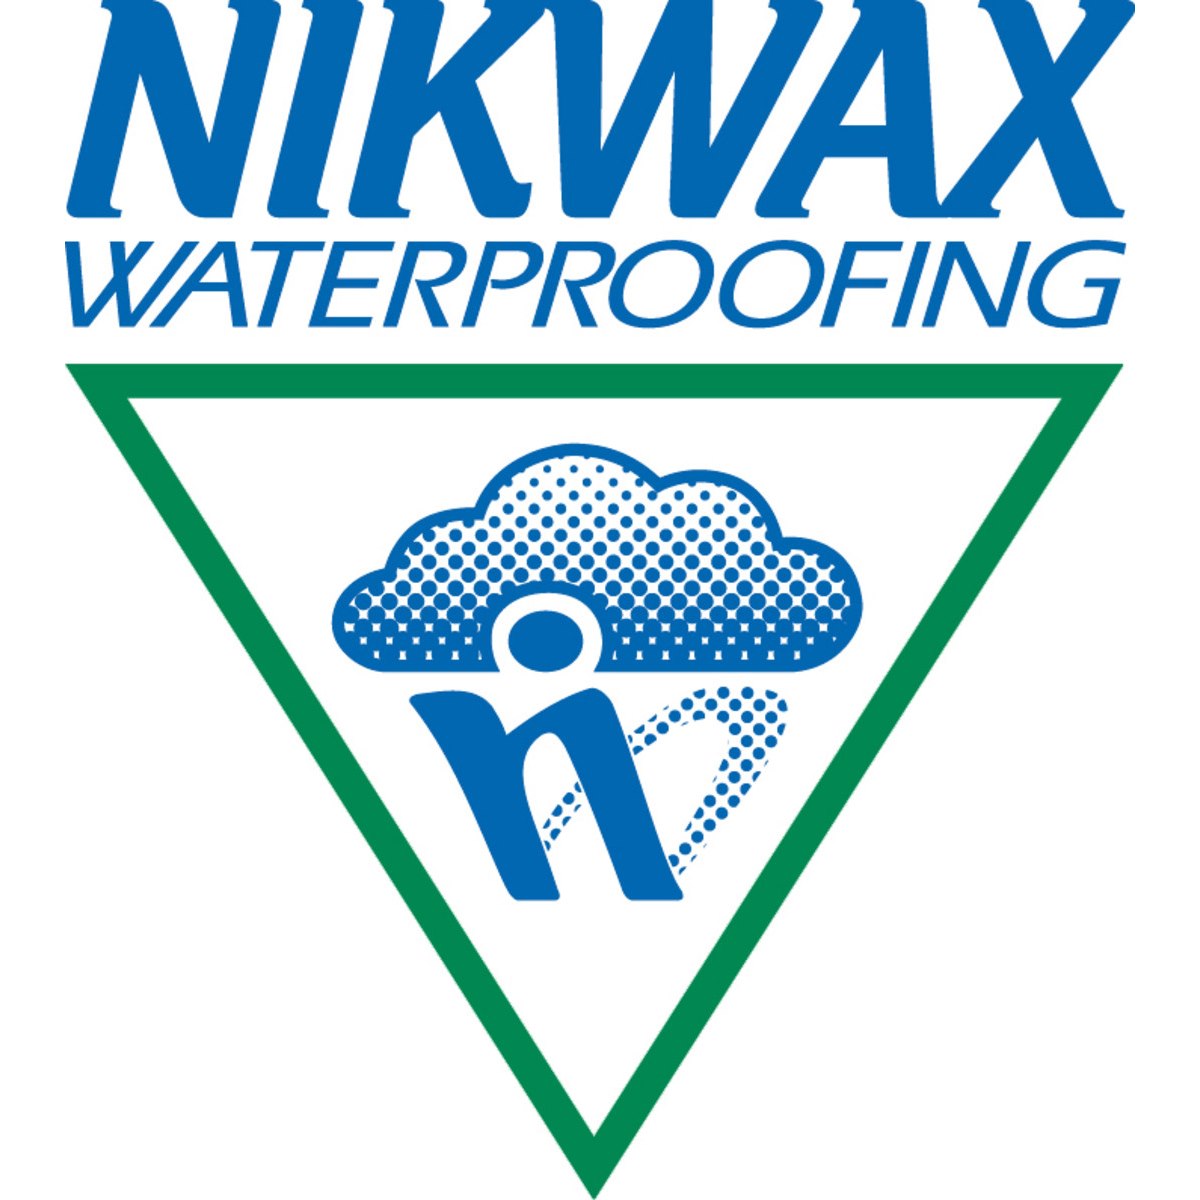 Nikwax Products